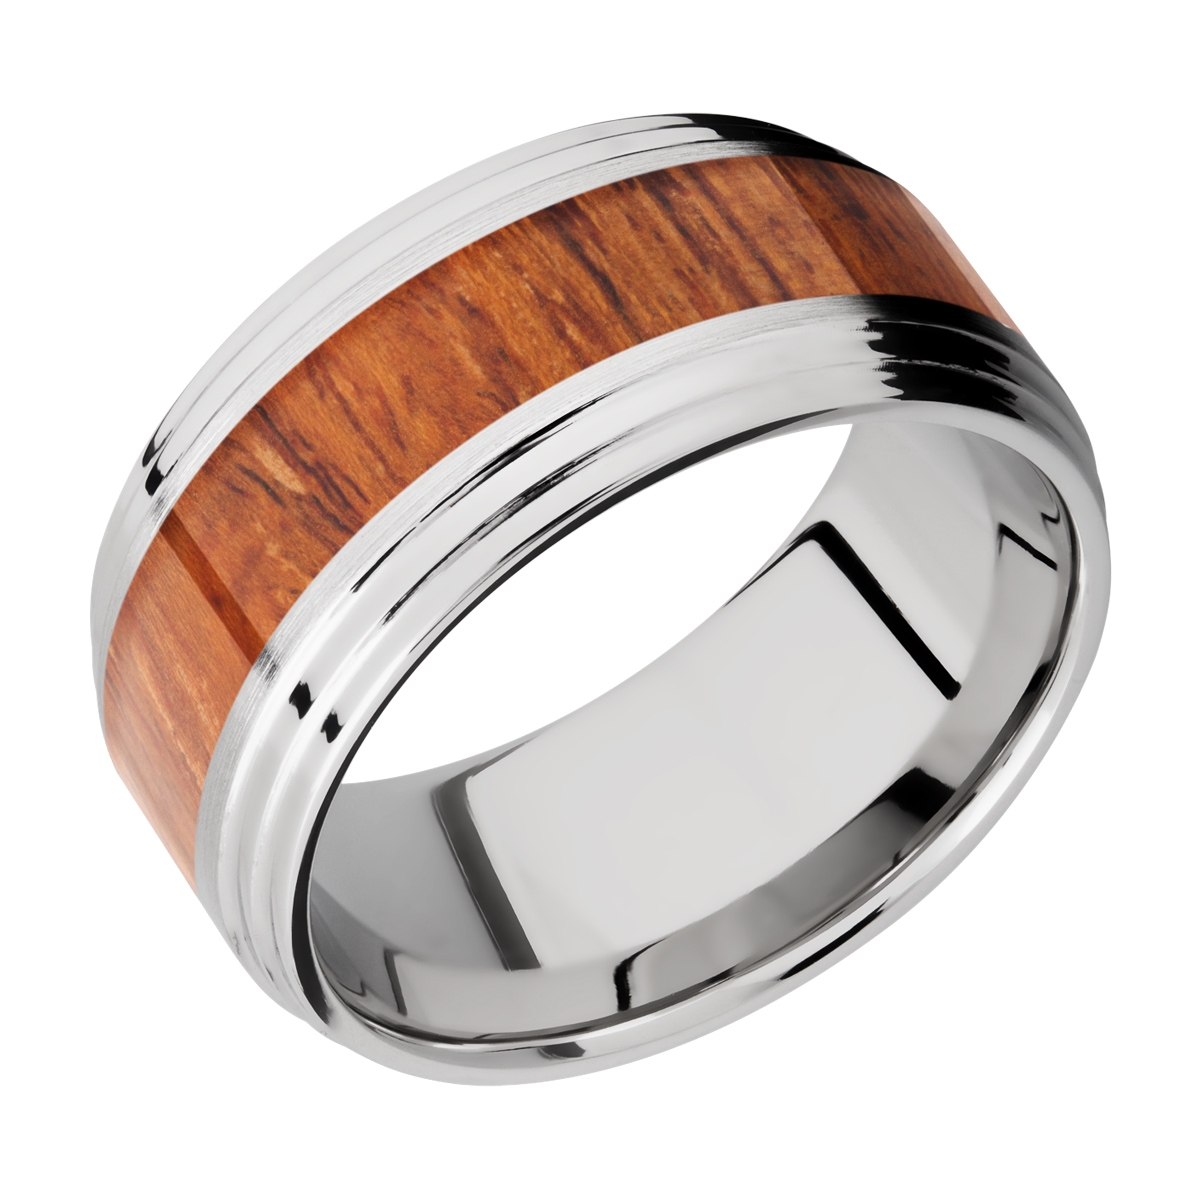 Lashbrook CC10F2S15/HARDWOOD Cobalt Chrome Wedding Ring or Band